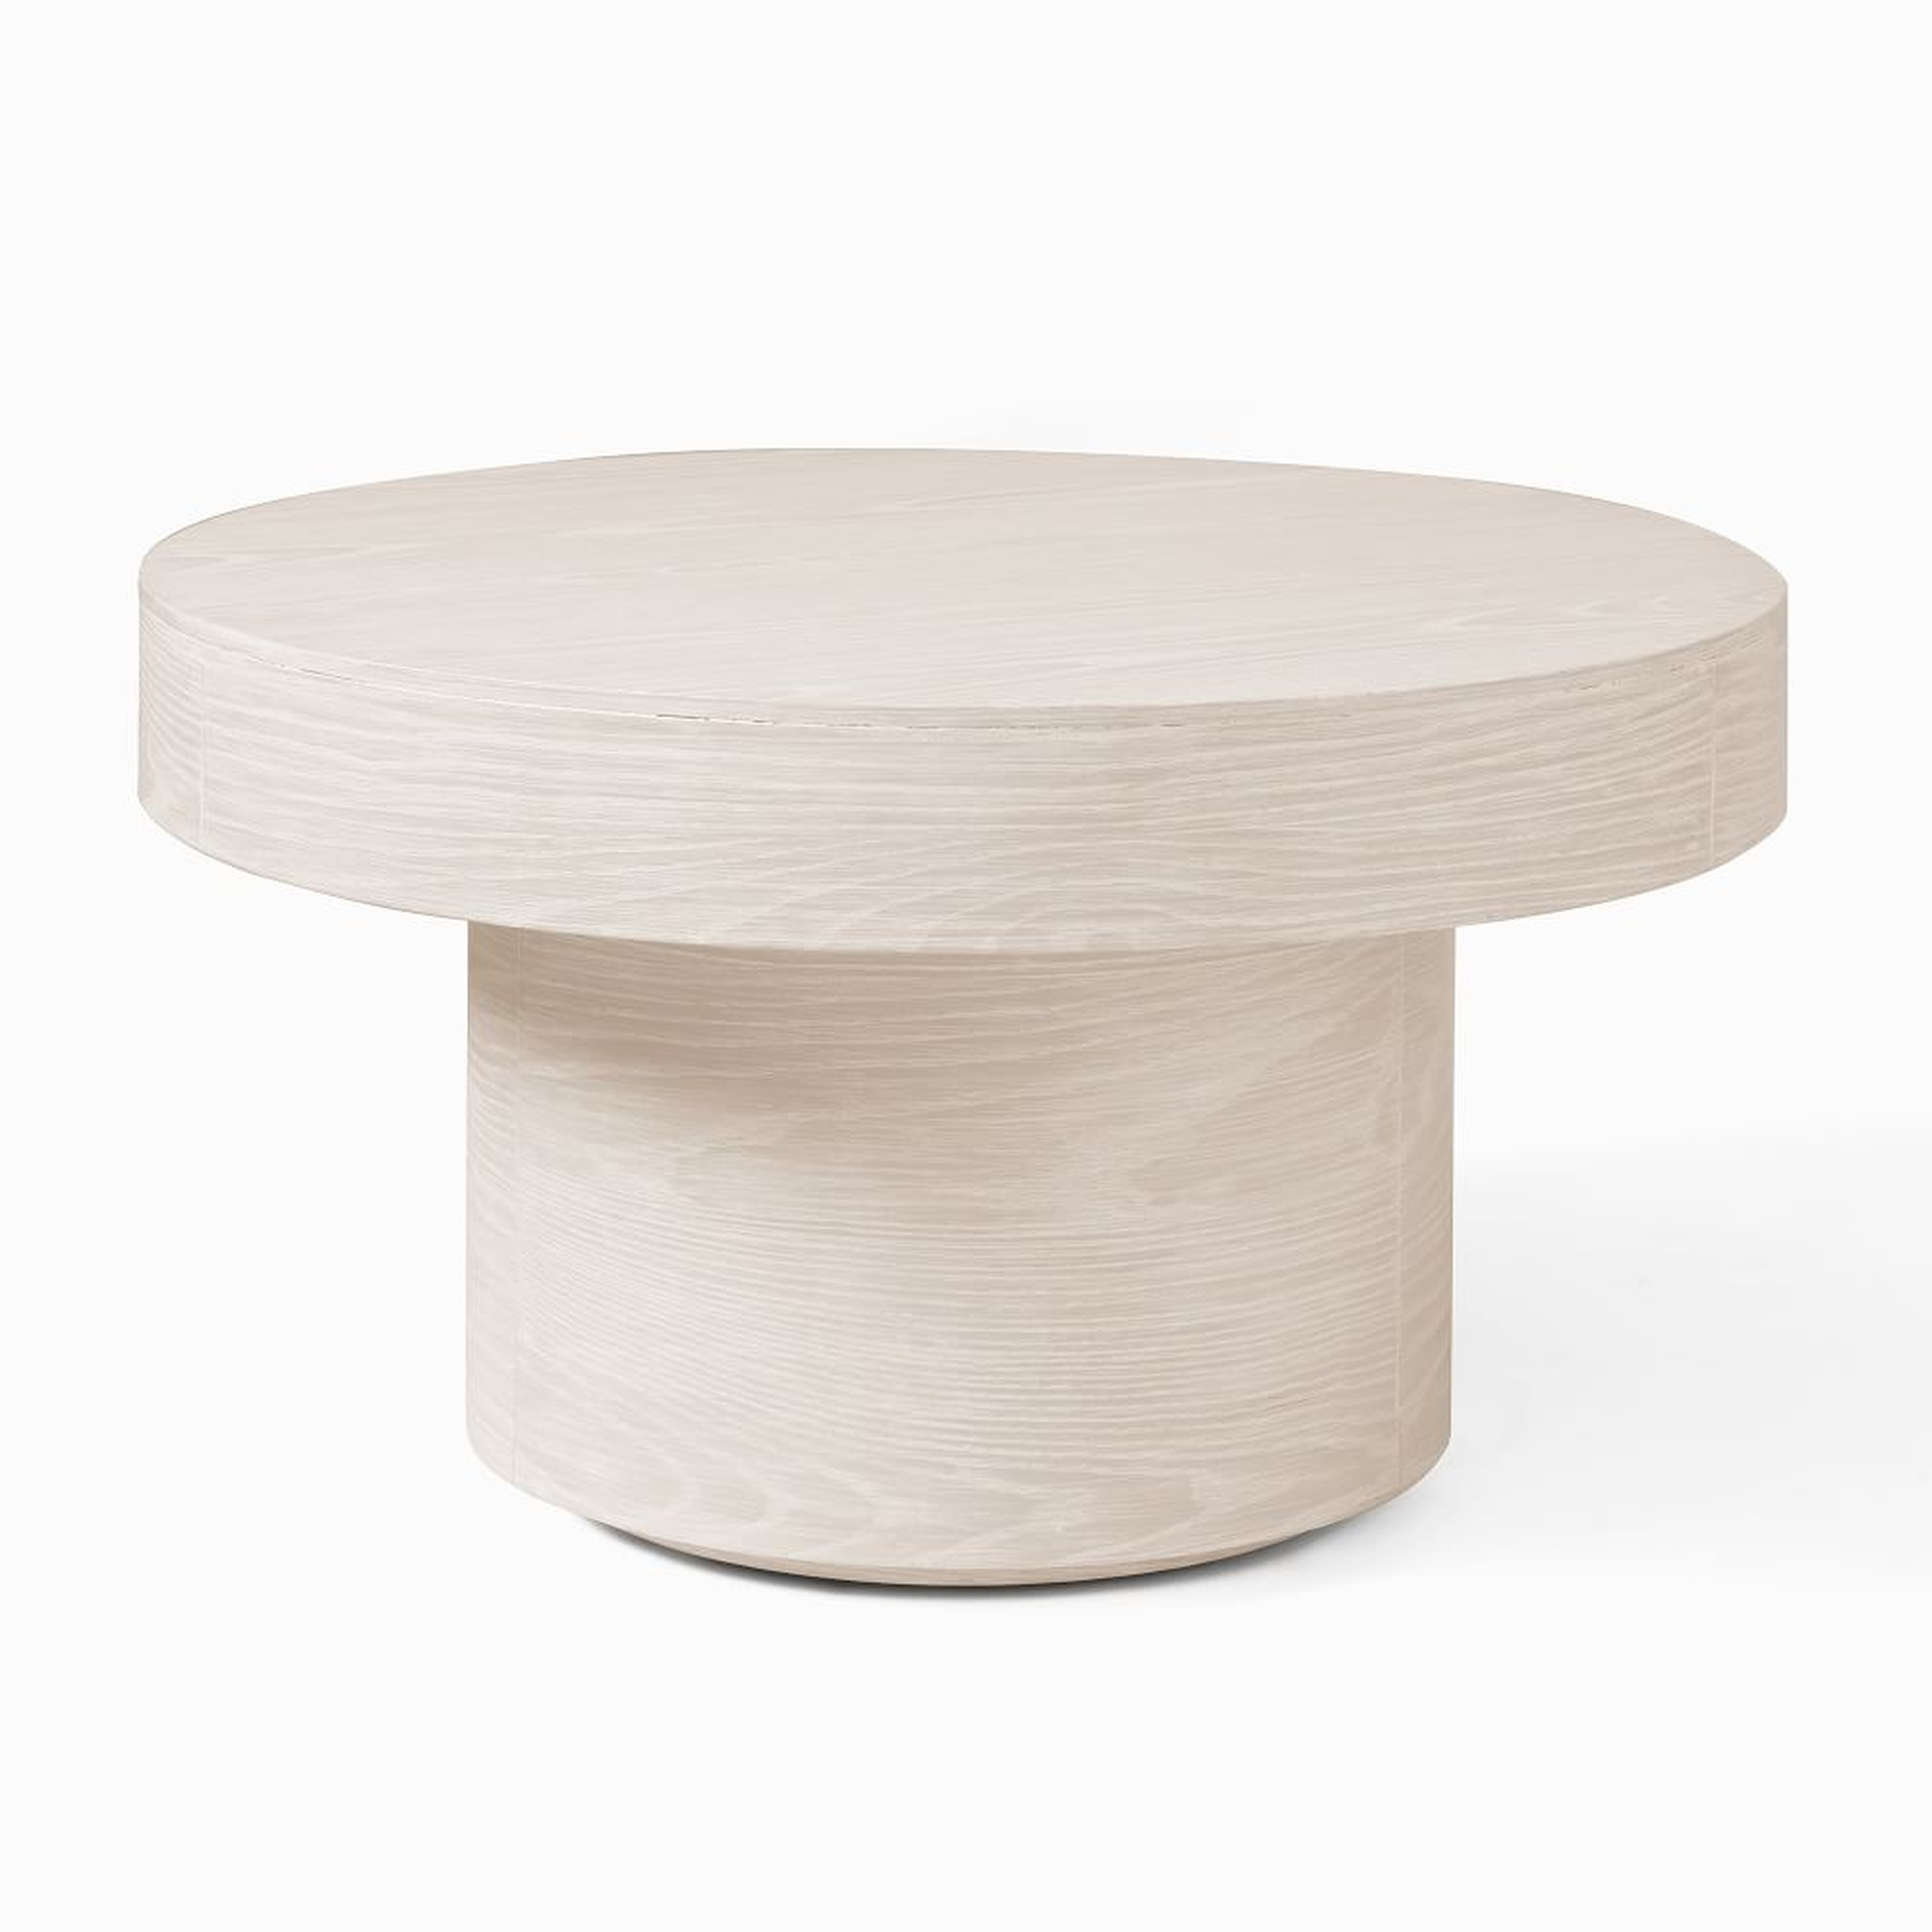 Round Pedestal Coffee Table, Winterwood - West Elm